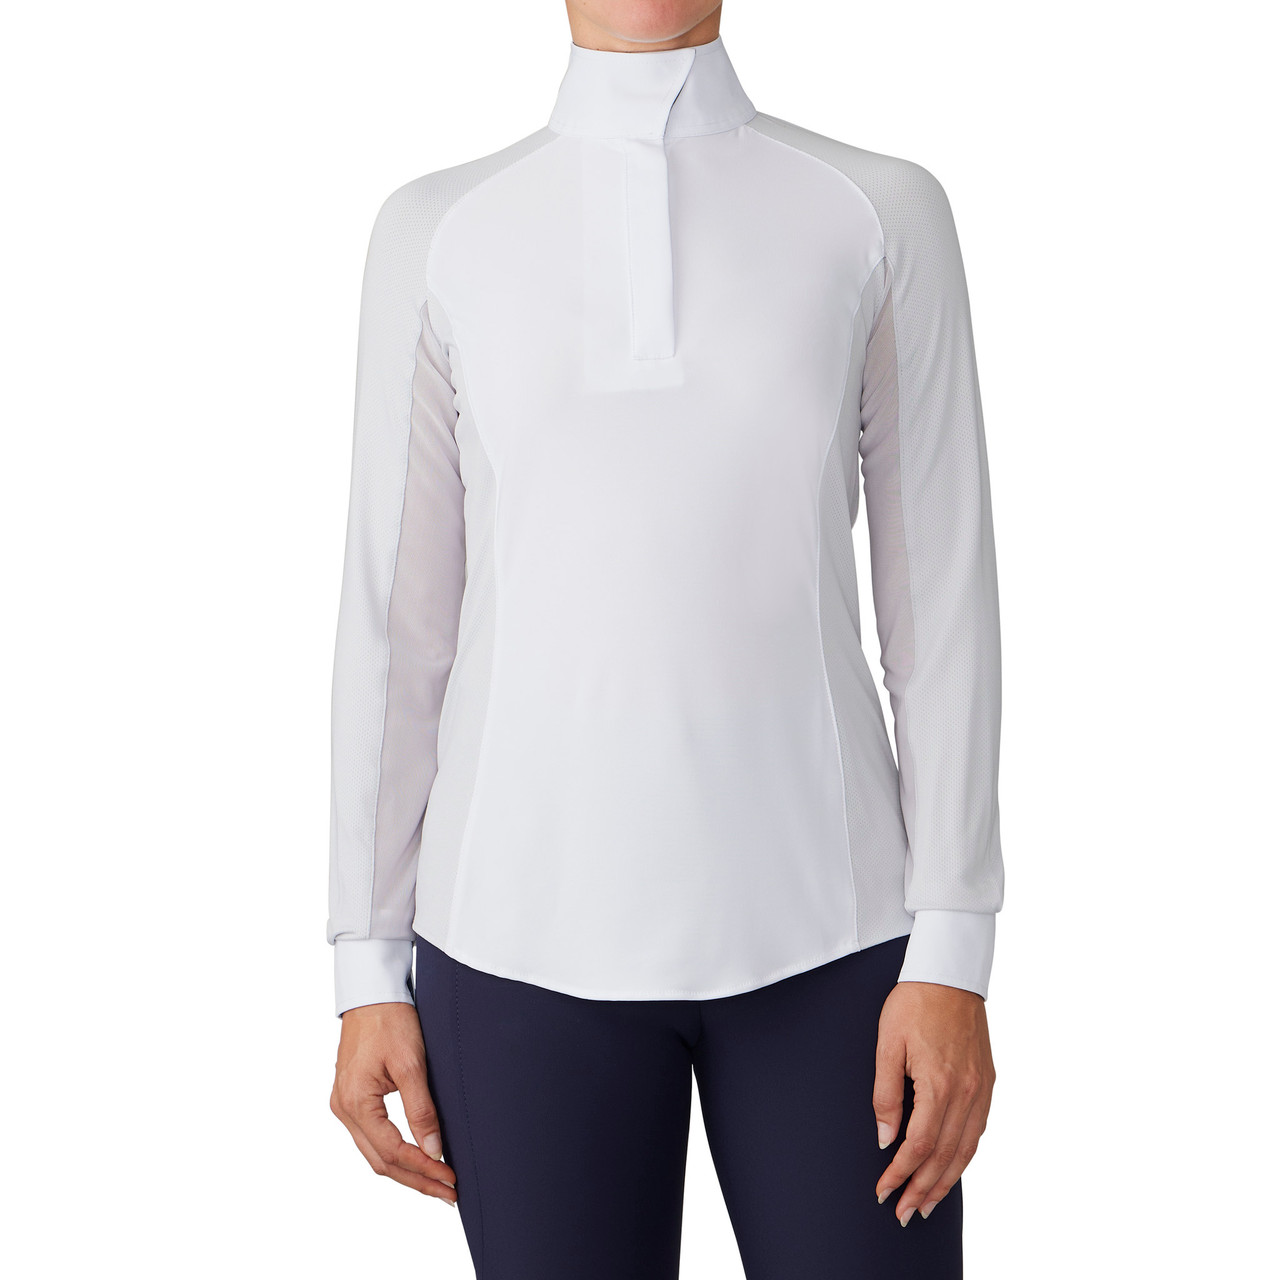 Ovation Altitude Long Sleeve Show Shirt - white w/grey horse print